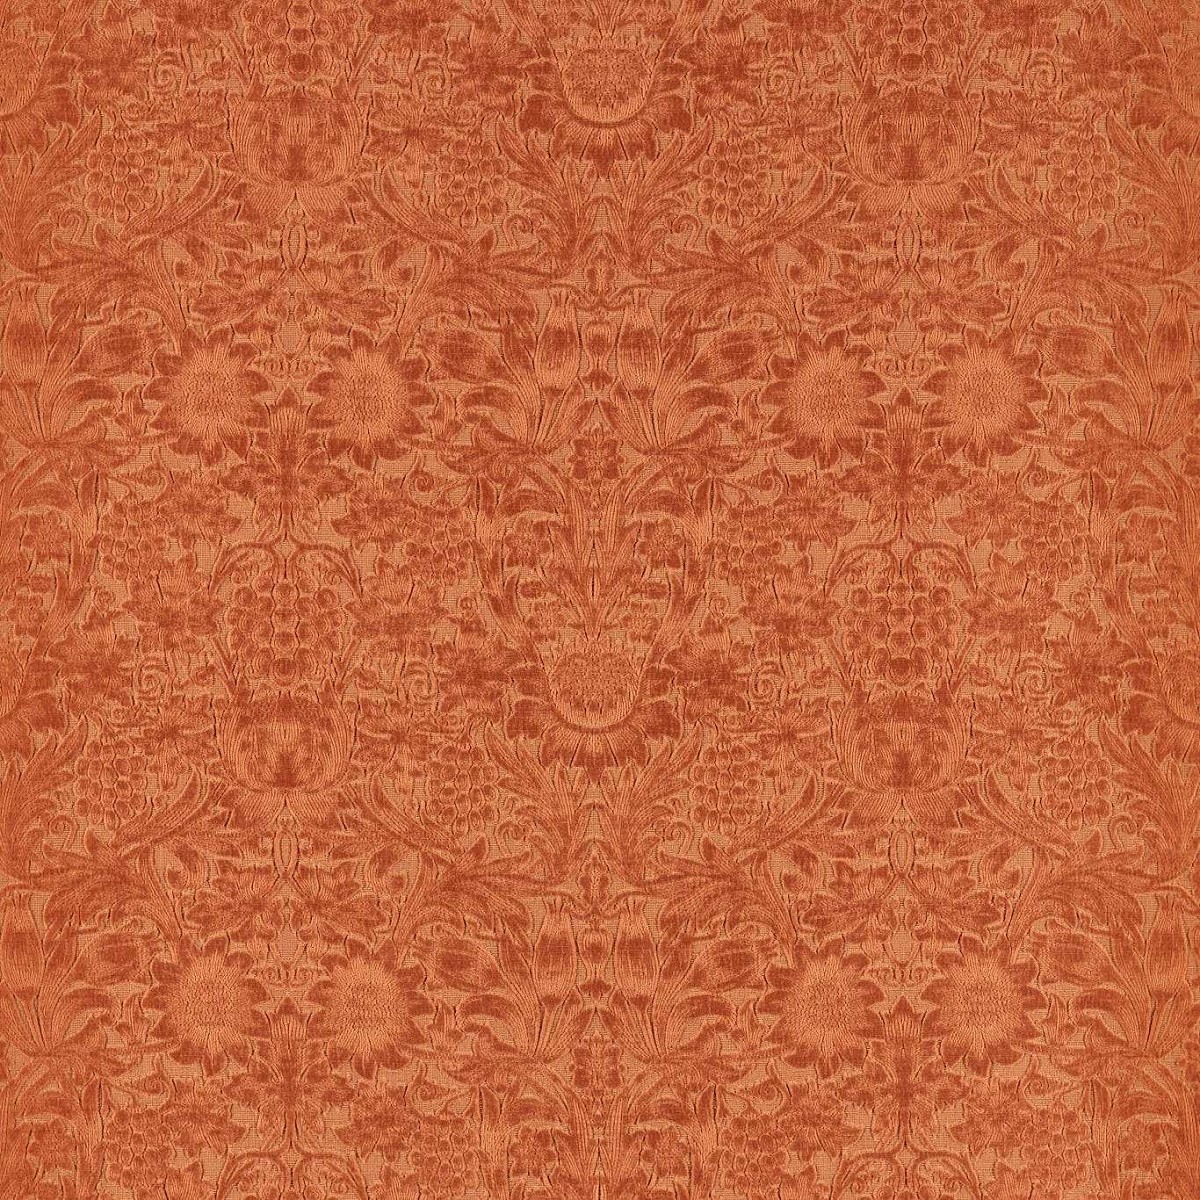 Sunflower Caffoy Velvet Redhouse Fabric by William Morris & Co.